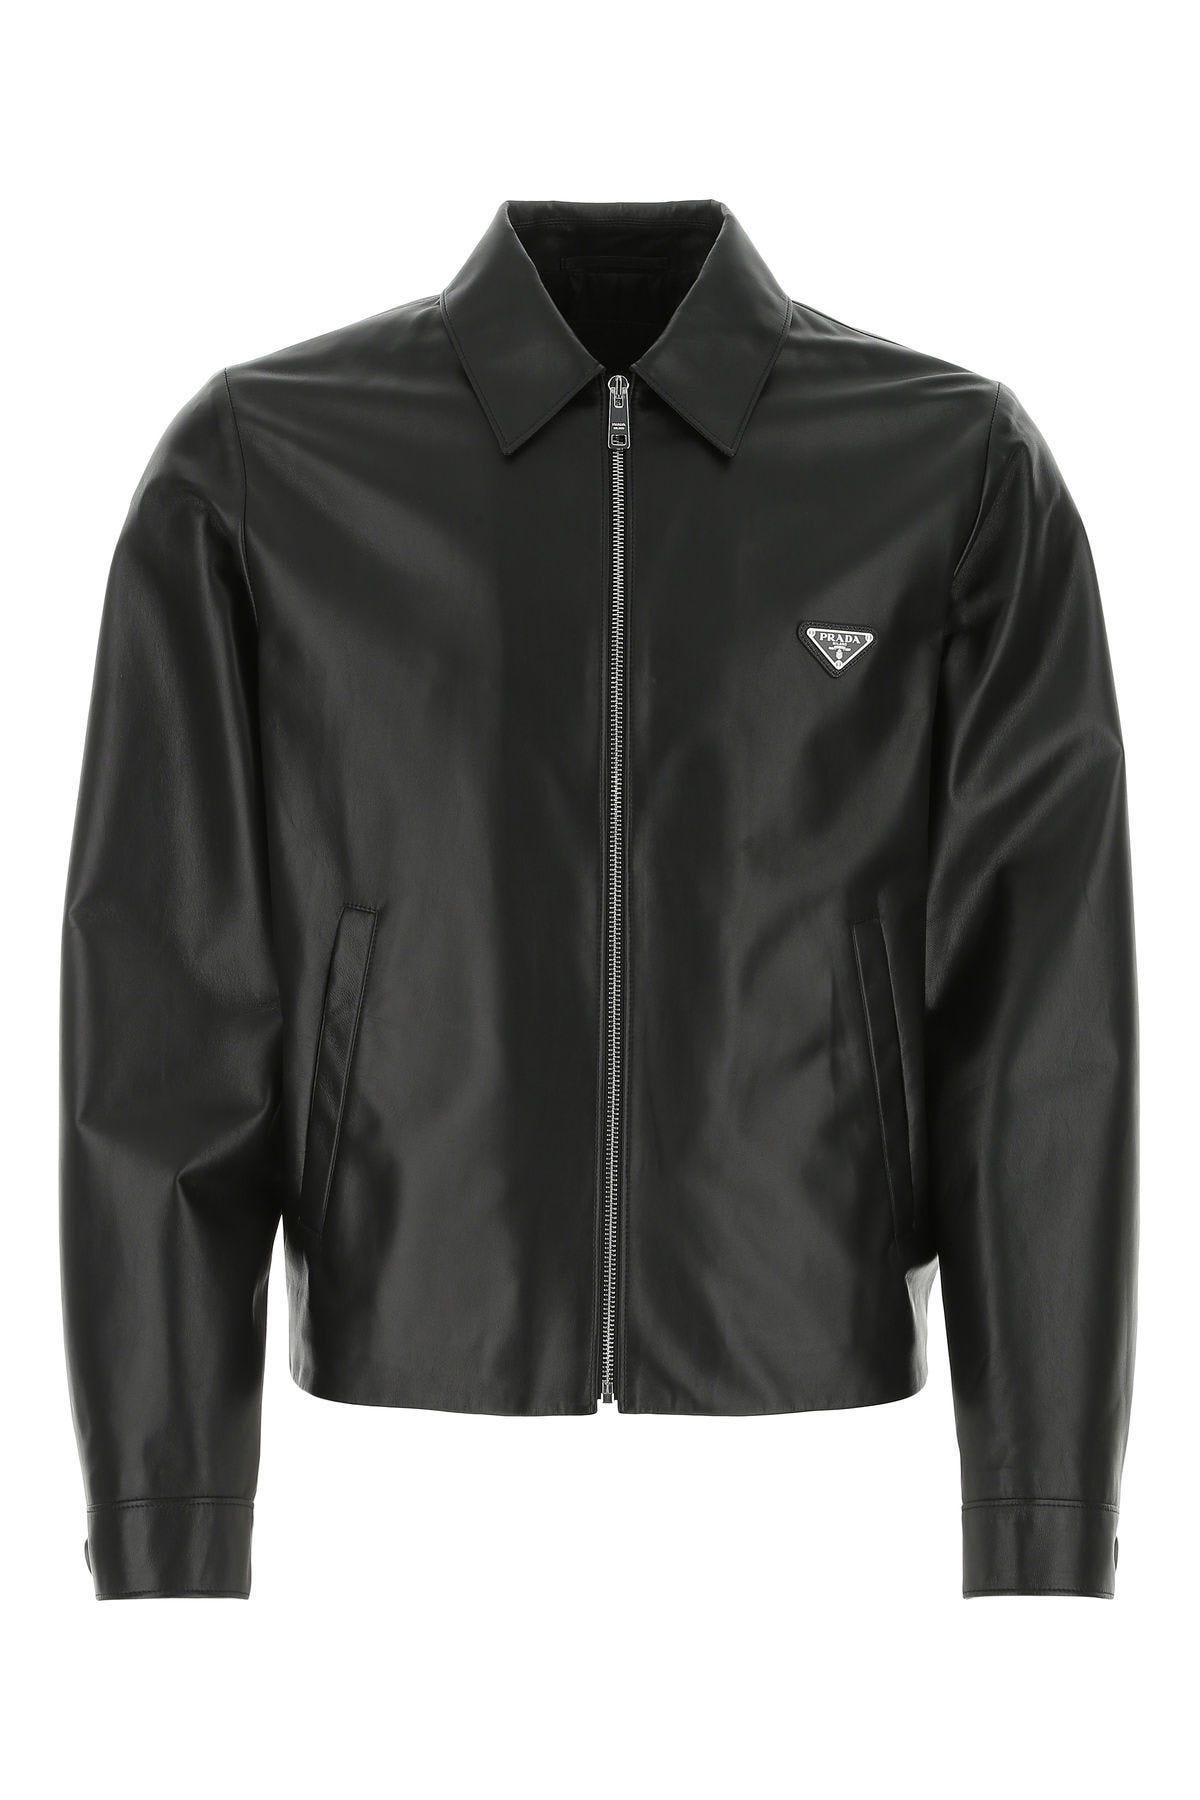 Prada Black Nappa Leather Jacket